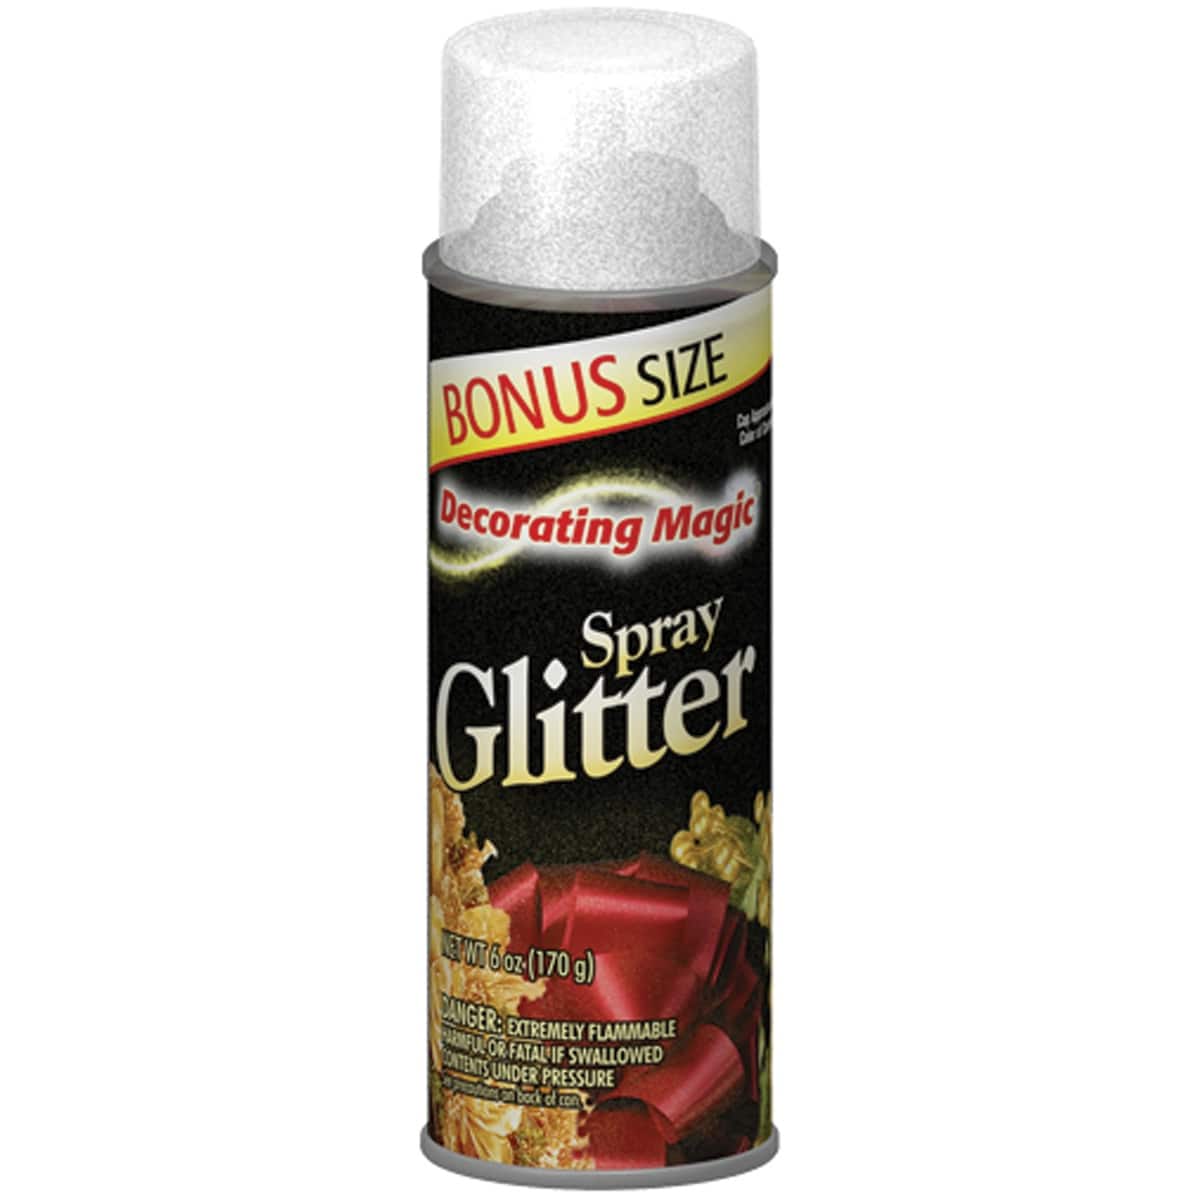 Decorating Magic Spray Glitter